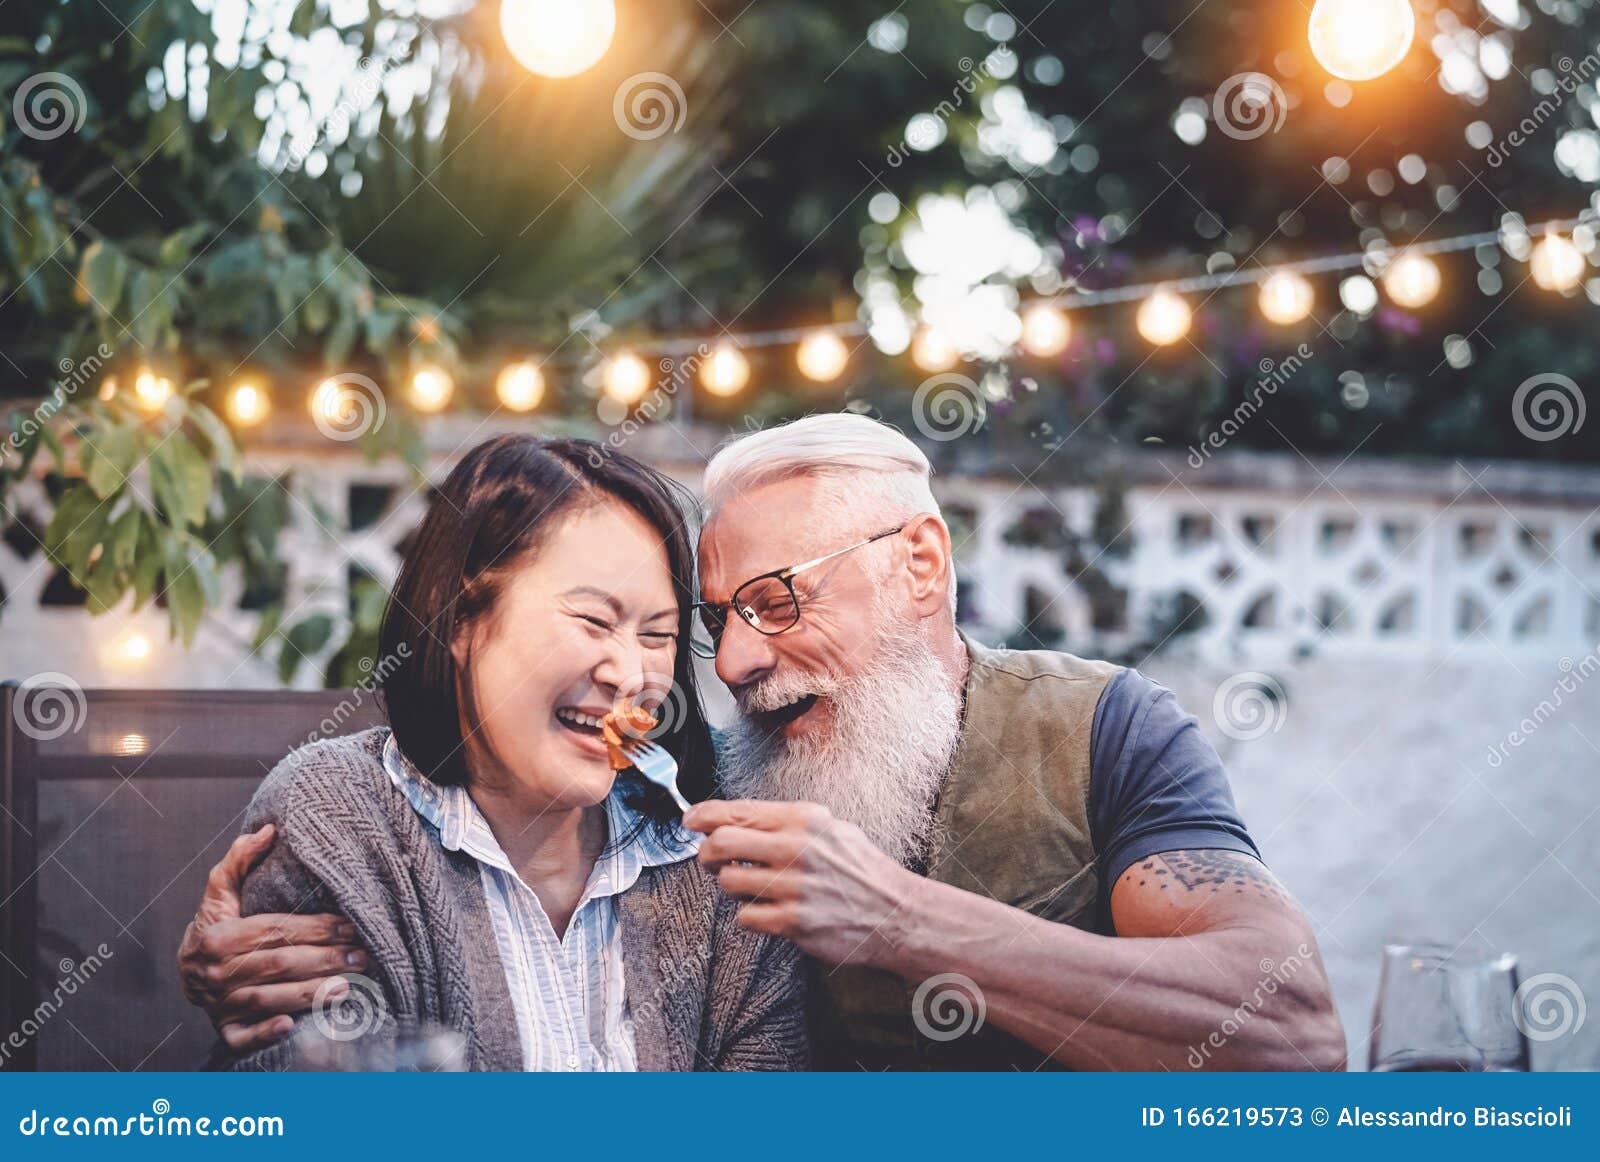 happy senior couple having fun at dinner house party